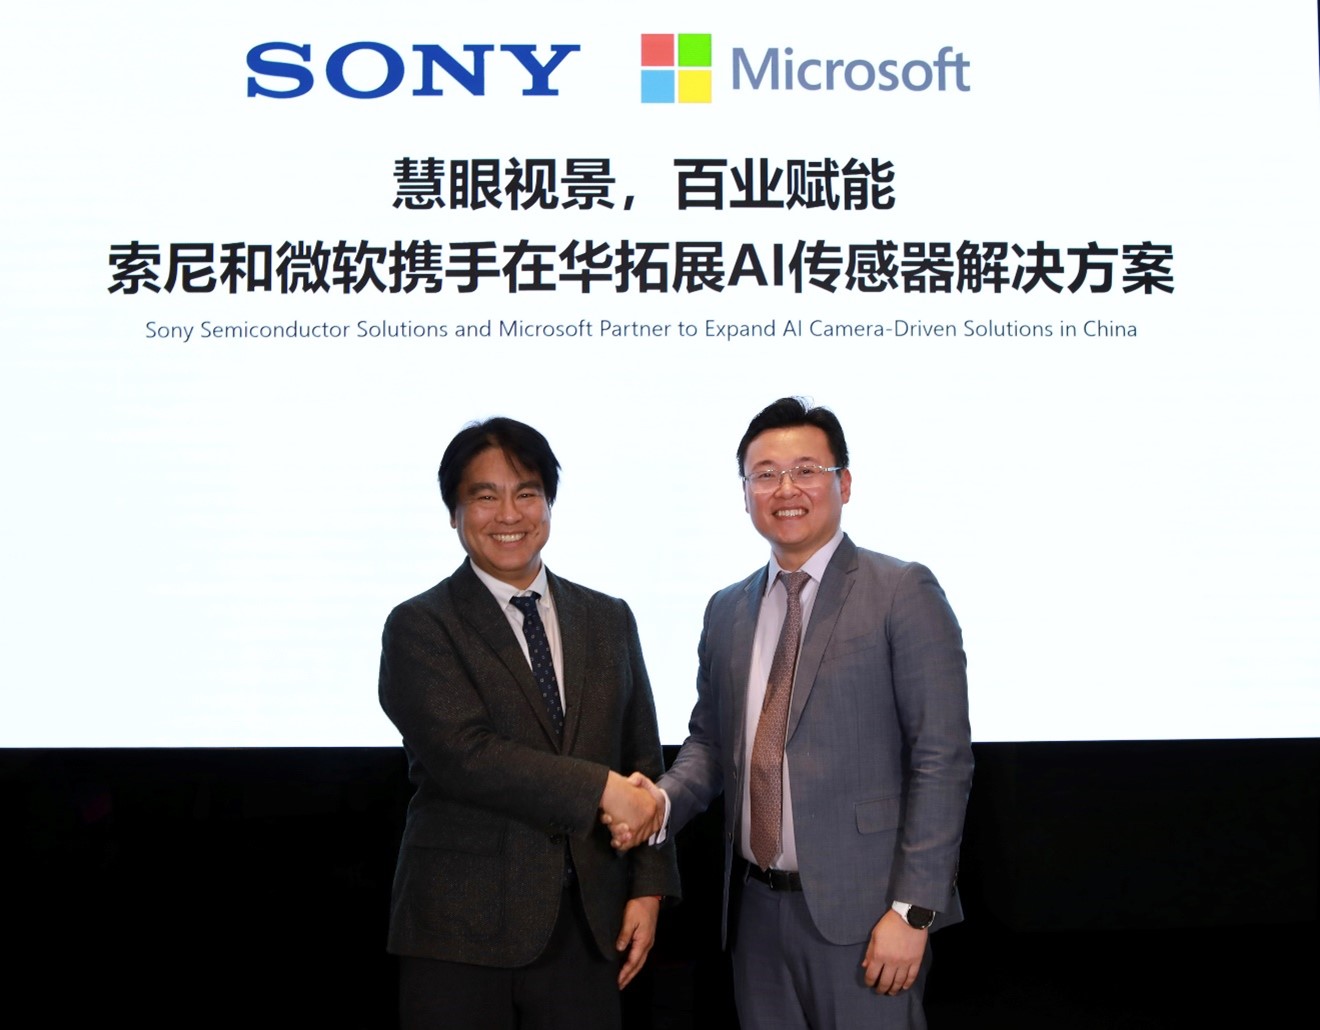 Makoto Kimura, President of Sony Semiconductor Solutions (Shanghai) Ltd. (Left) and Joe Bao, President of Microsoft China (Right)